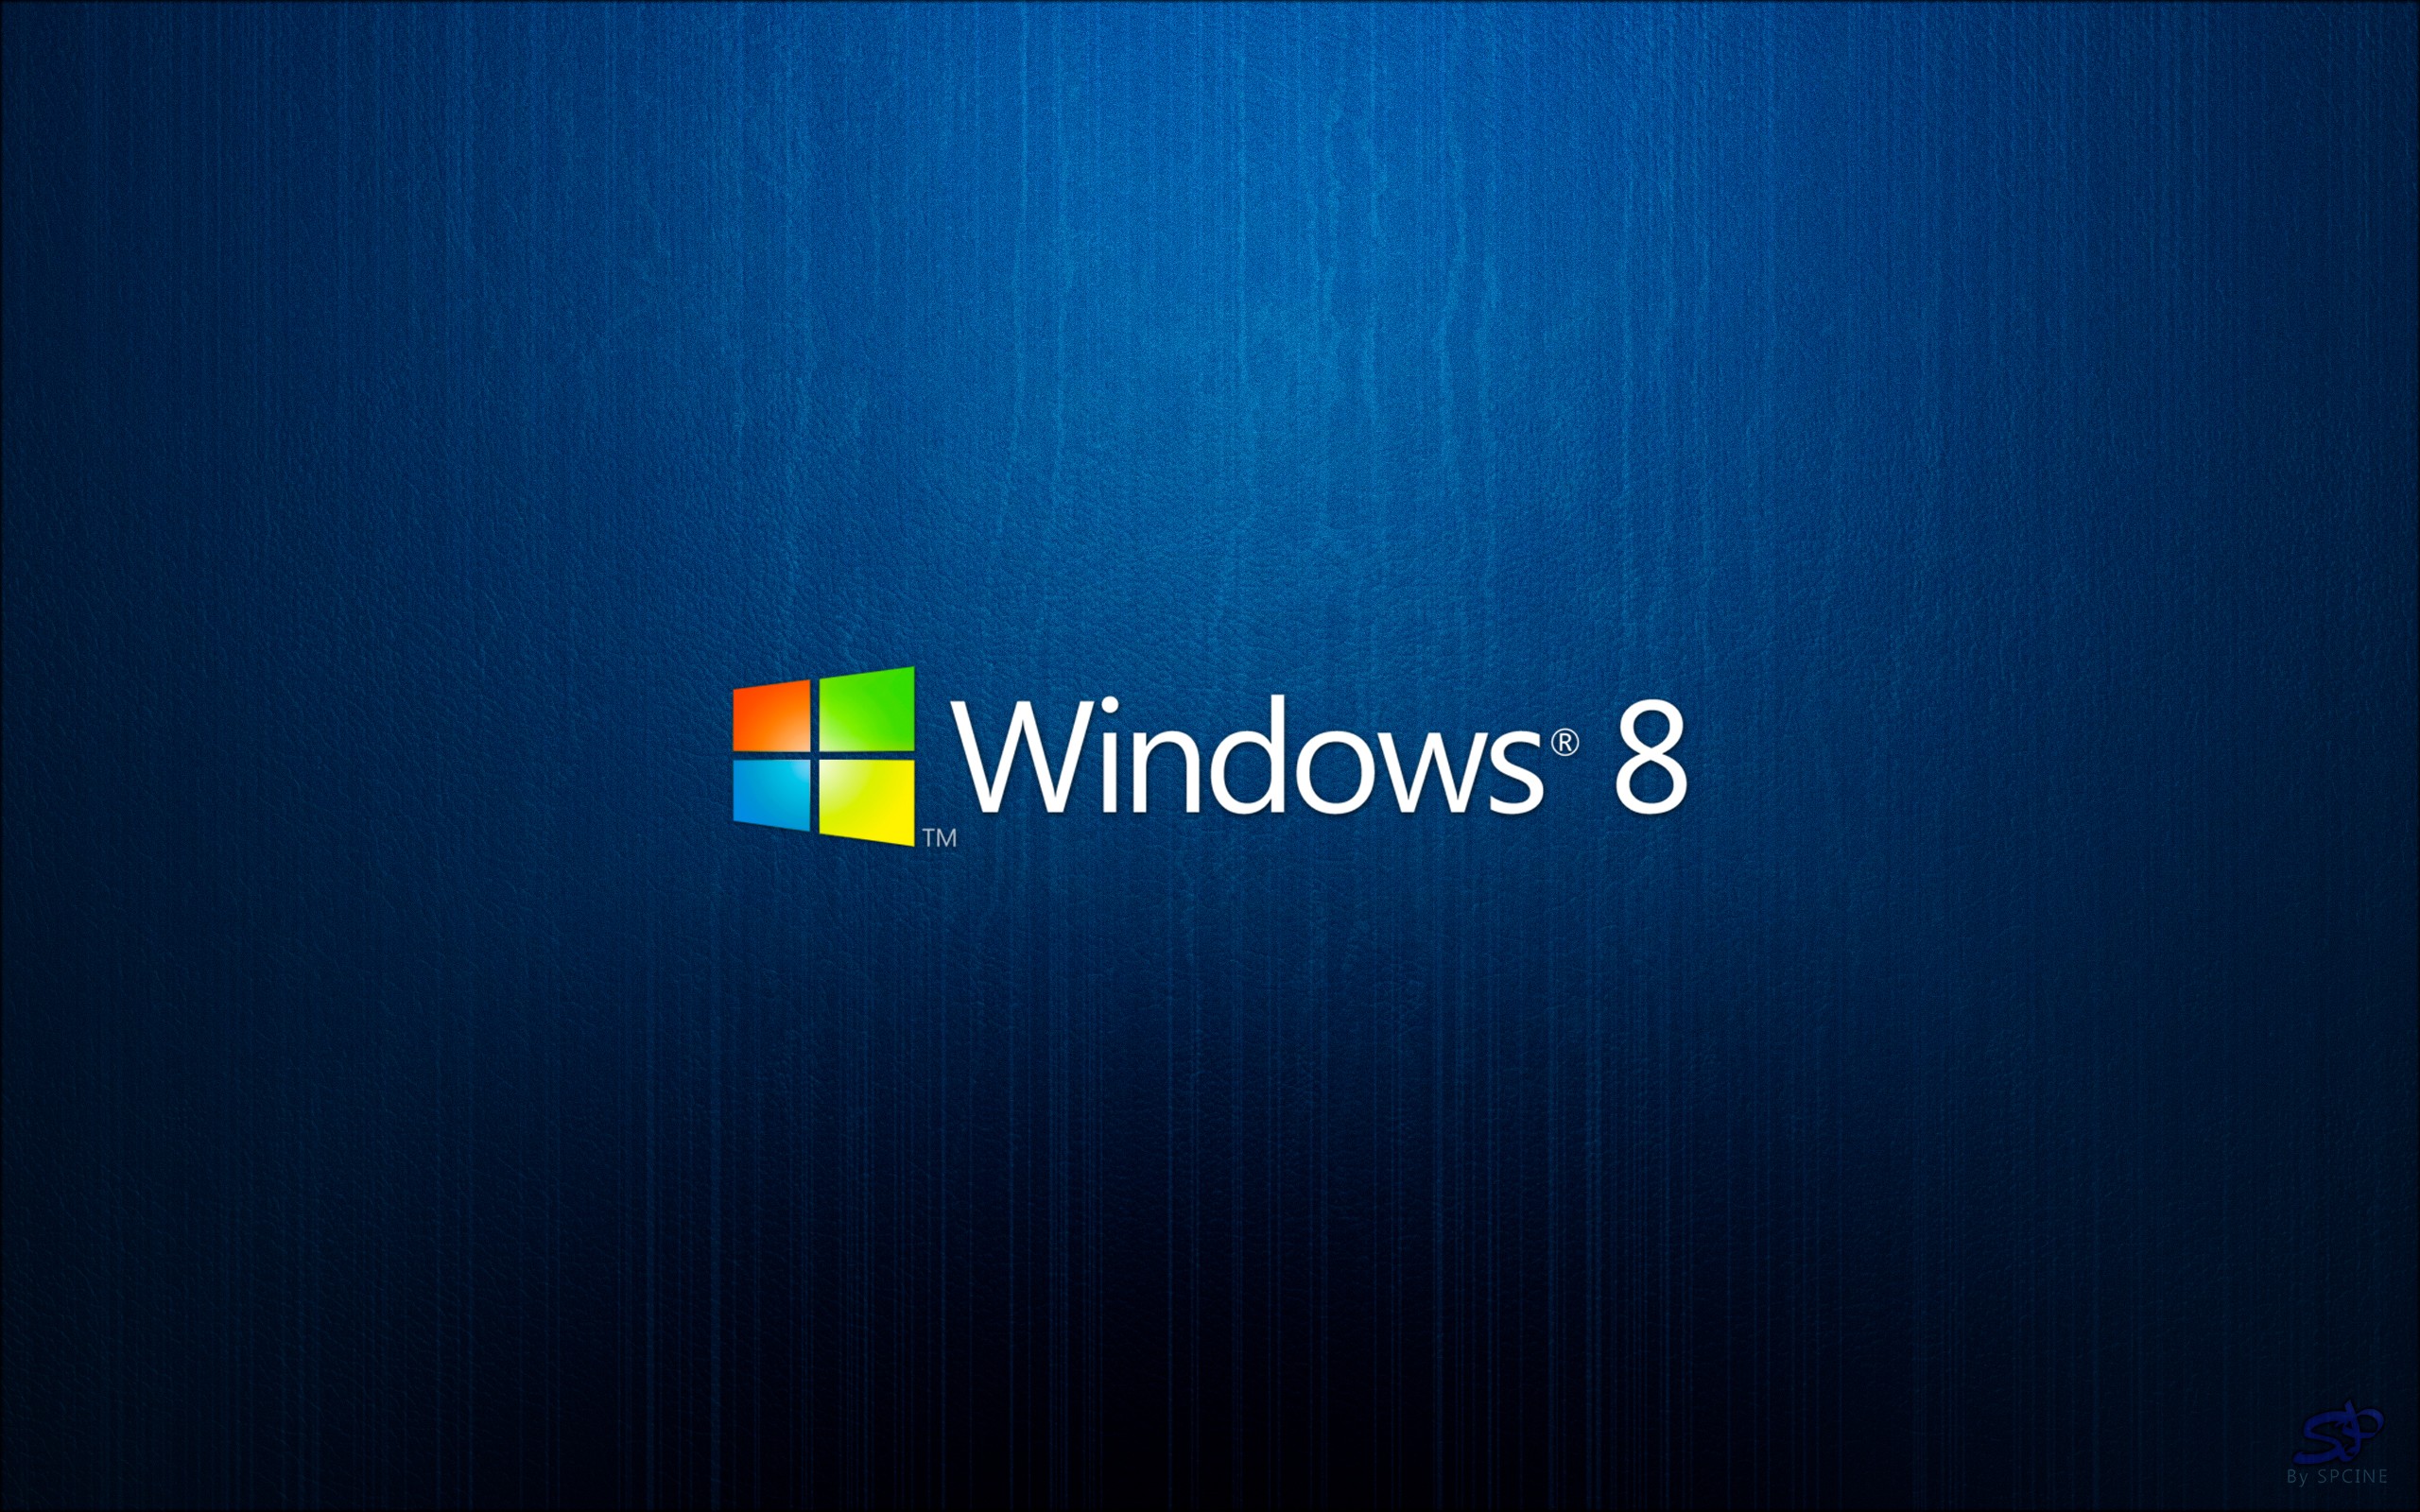 Windows 8.1 Wallpaper HD 1366x768 - WallpaperSafari